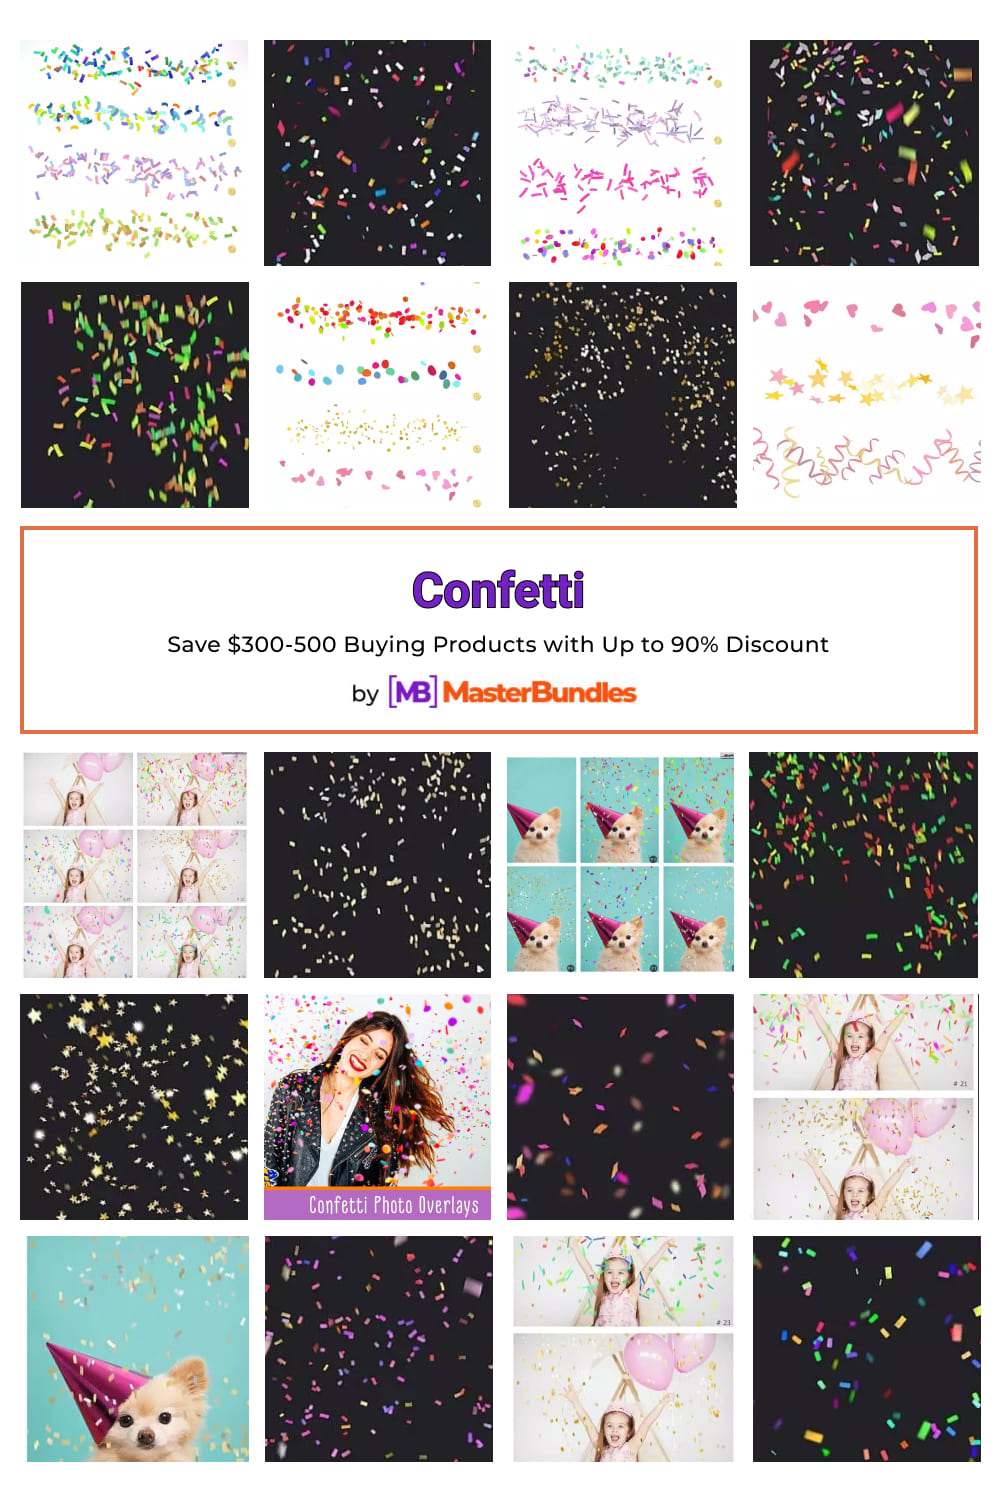 Confetti Overlays Pinterest image.